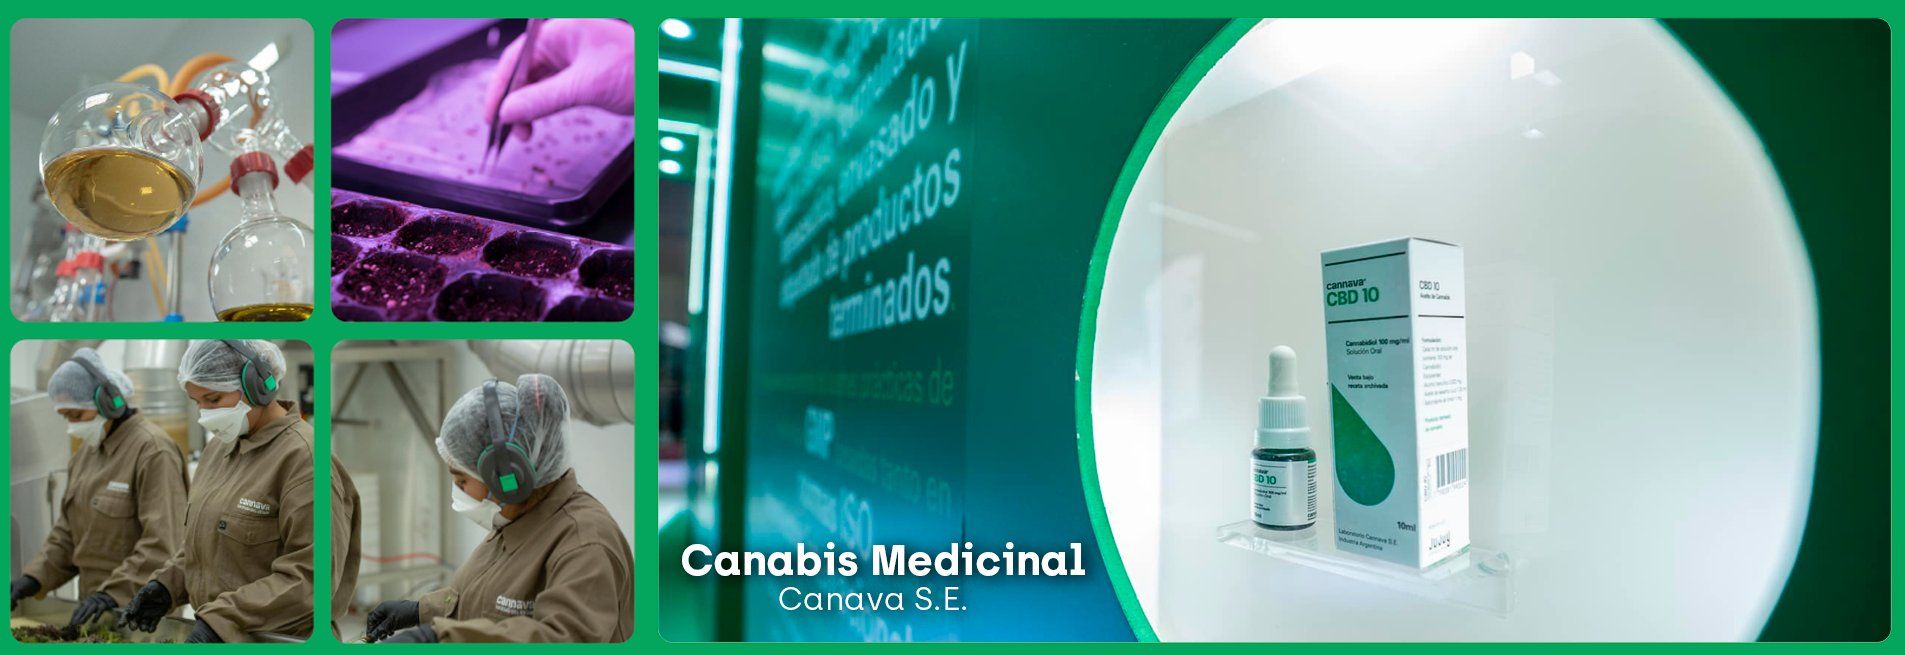 Canabis Medicinal